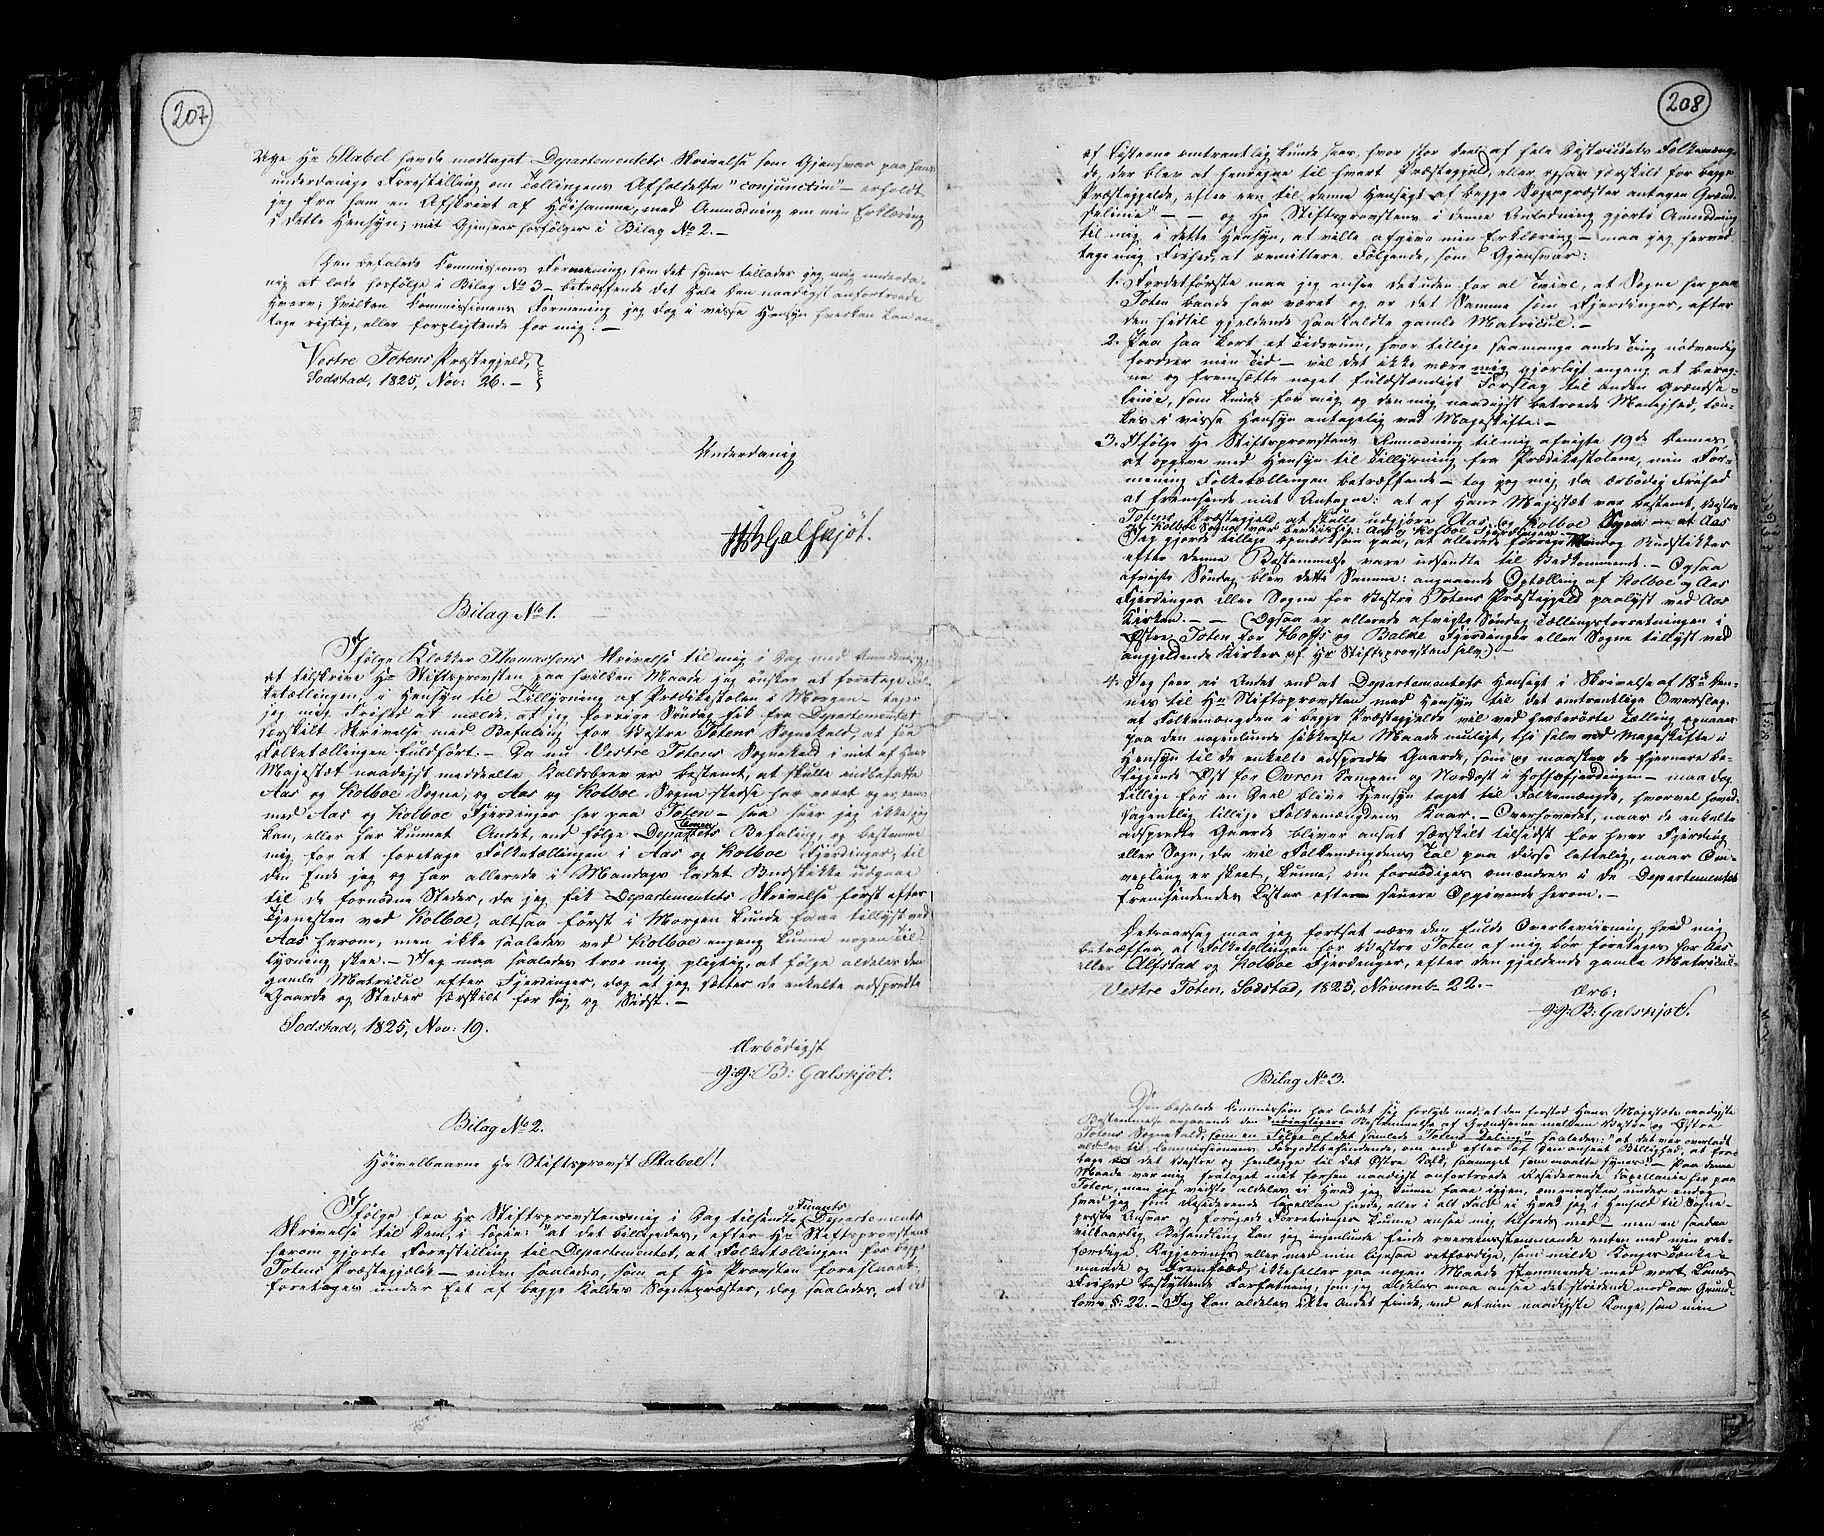 RA, Folketellingen 1825, bind 6: Kristians amt, 1825, s. 207-208